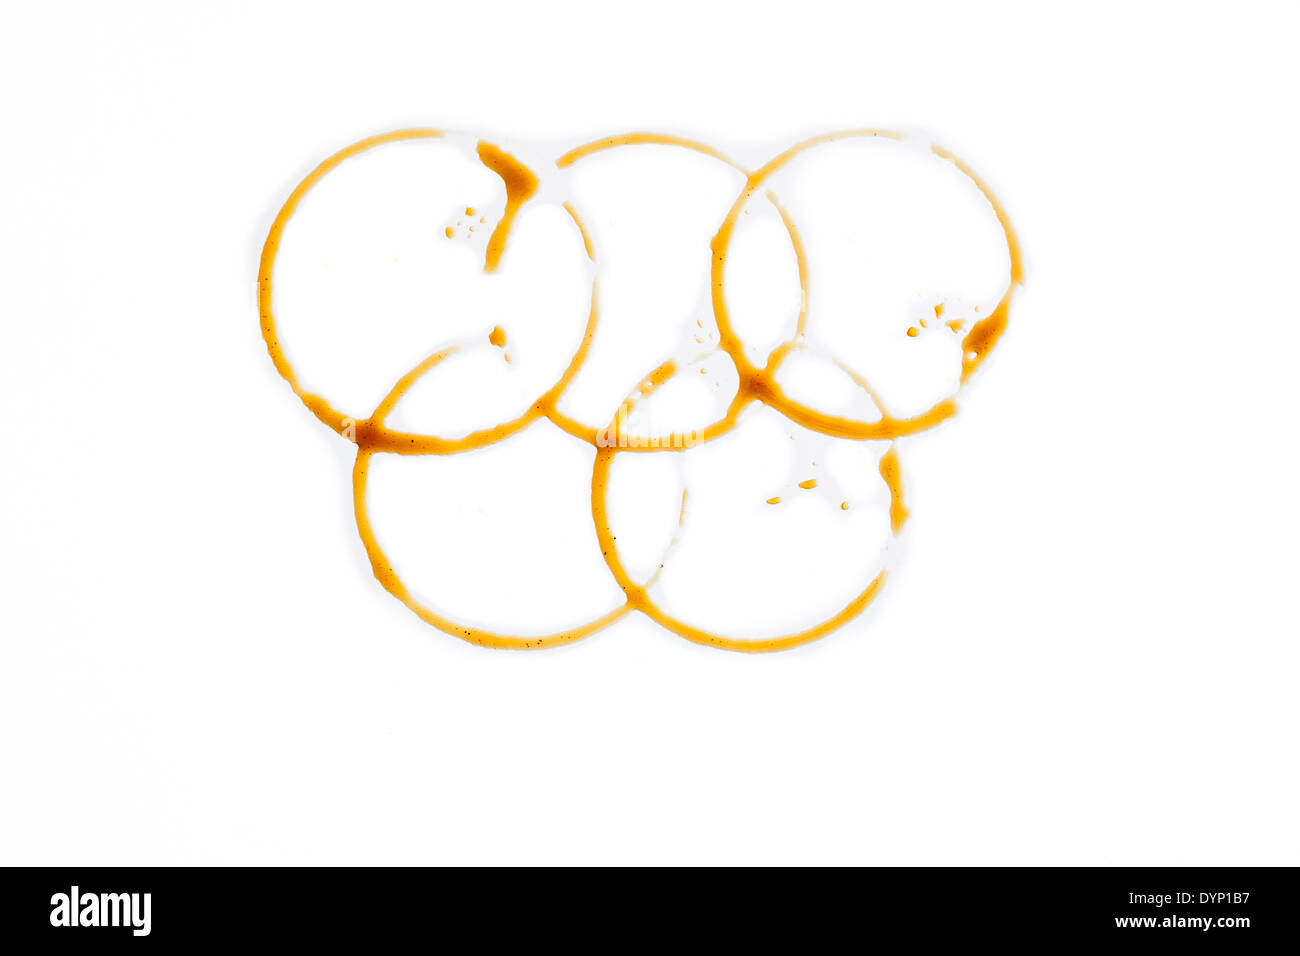 Anelli olimpici fatta di gocce di caffè Foto Stock